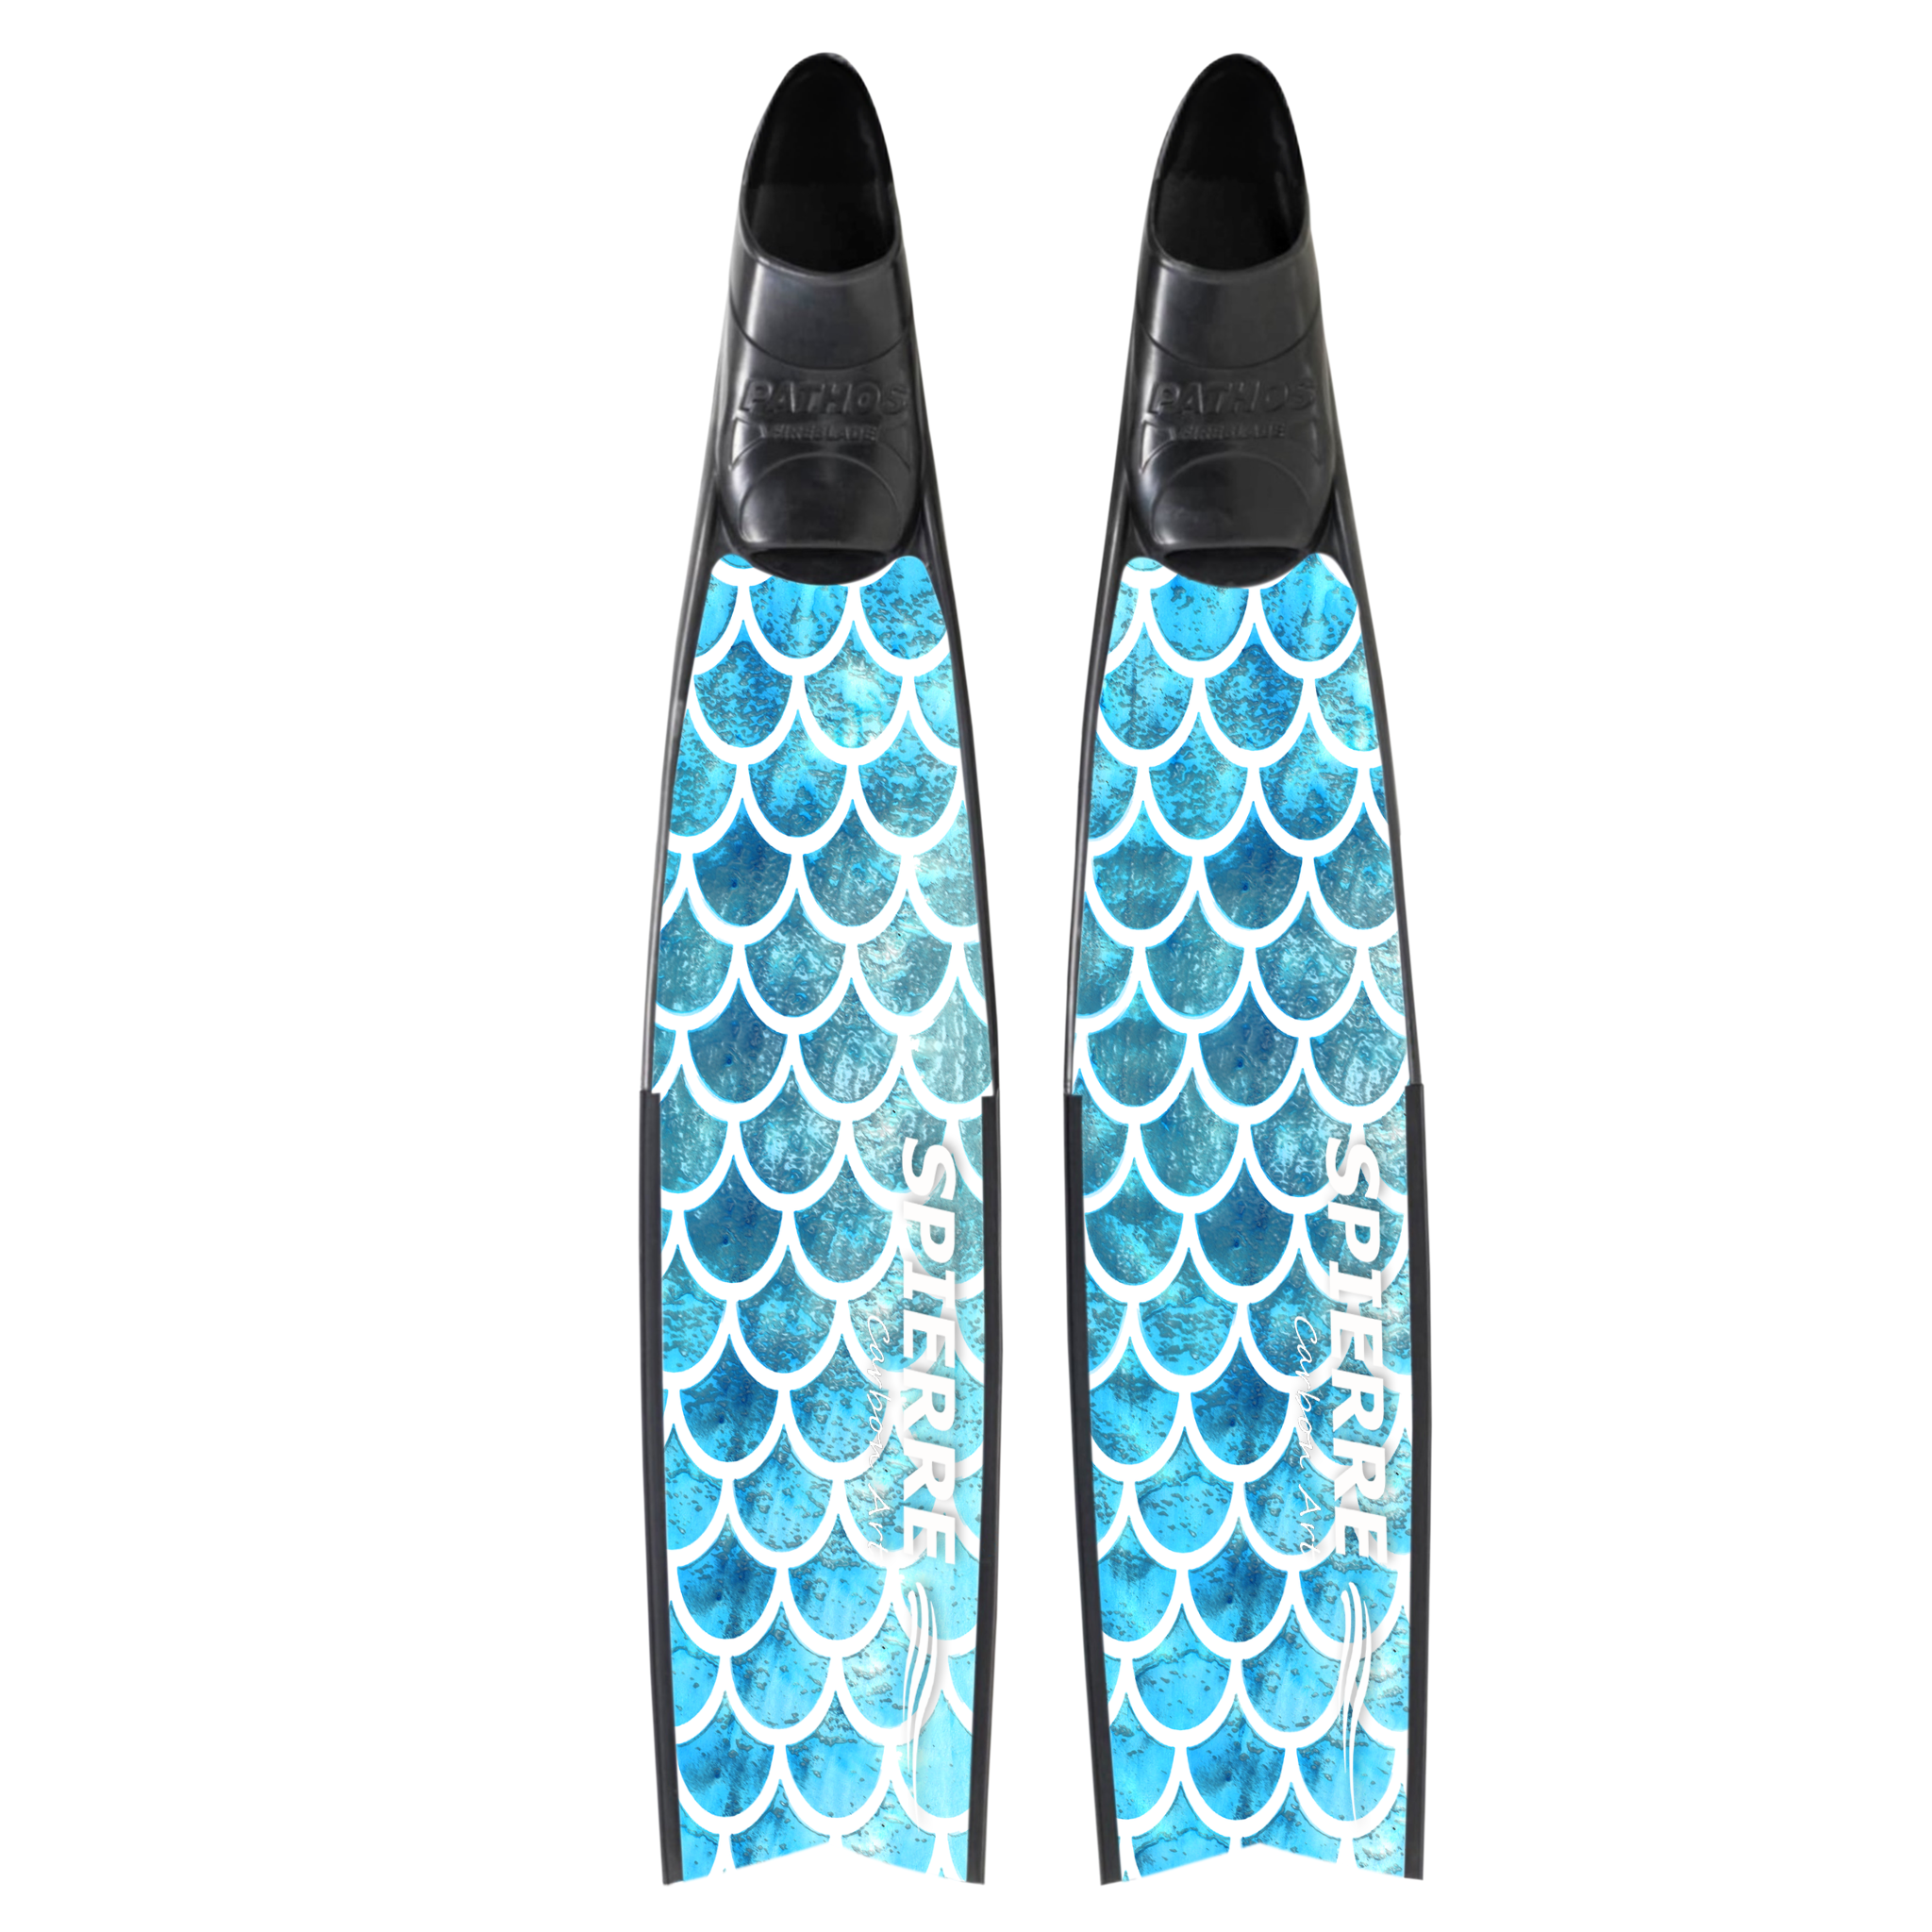 Carbon Art Whale Shark Fin Blades - Apnea Range (Set/Pair) - Spierre